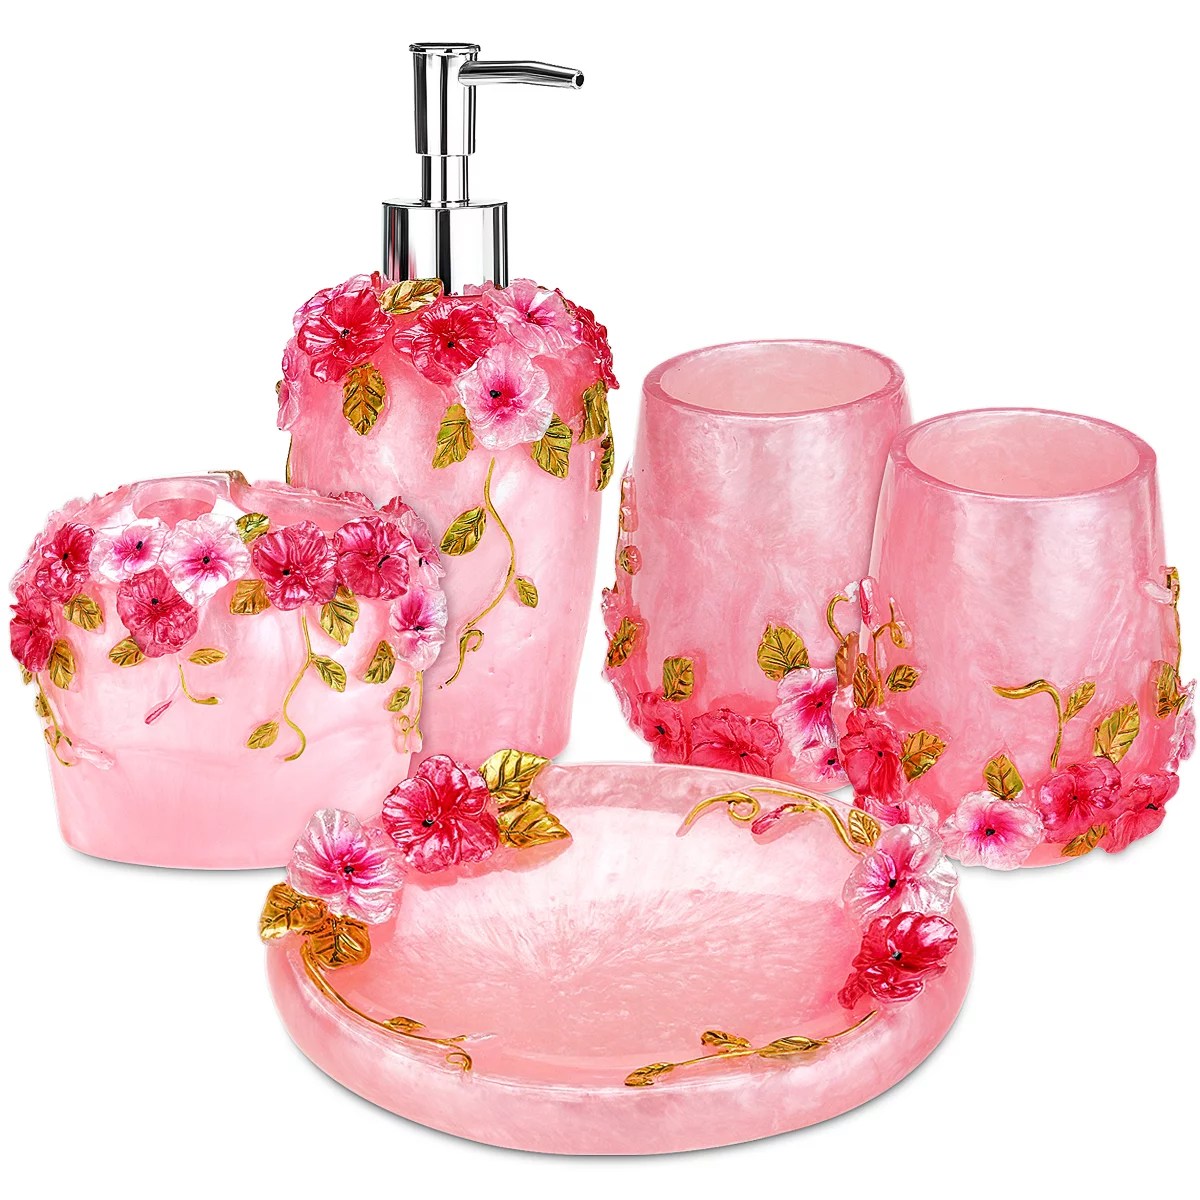 Rose Bathroom Accessories Set, 5 Piece Decorative Resin Collection Bath